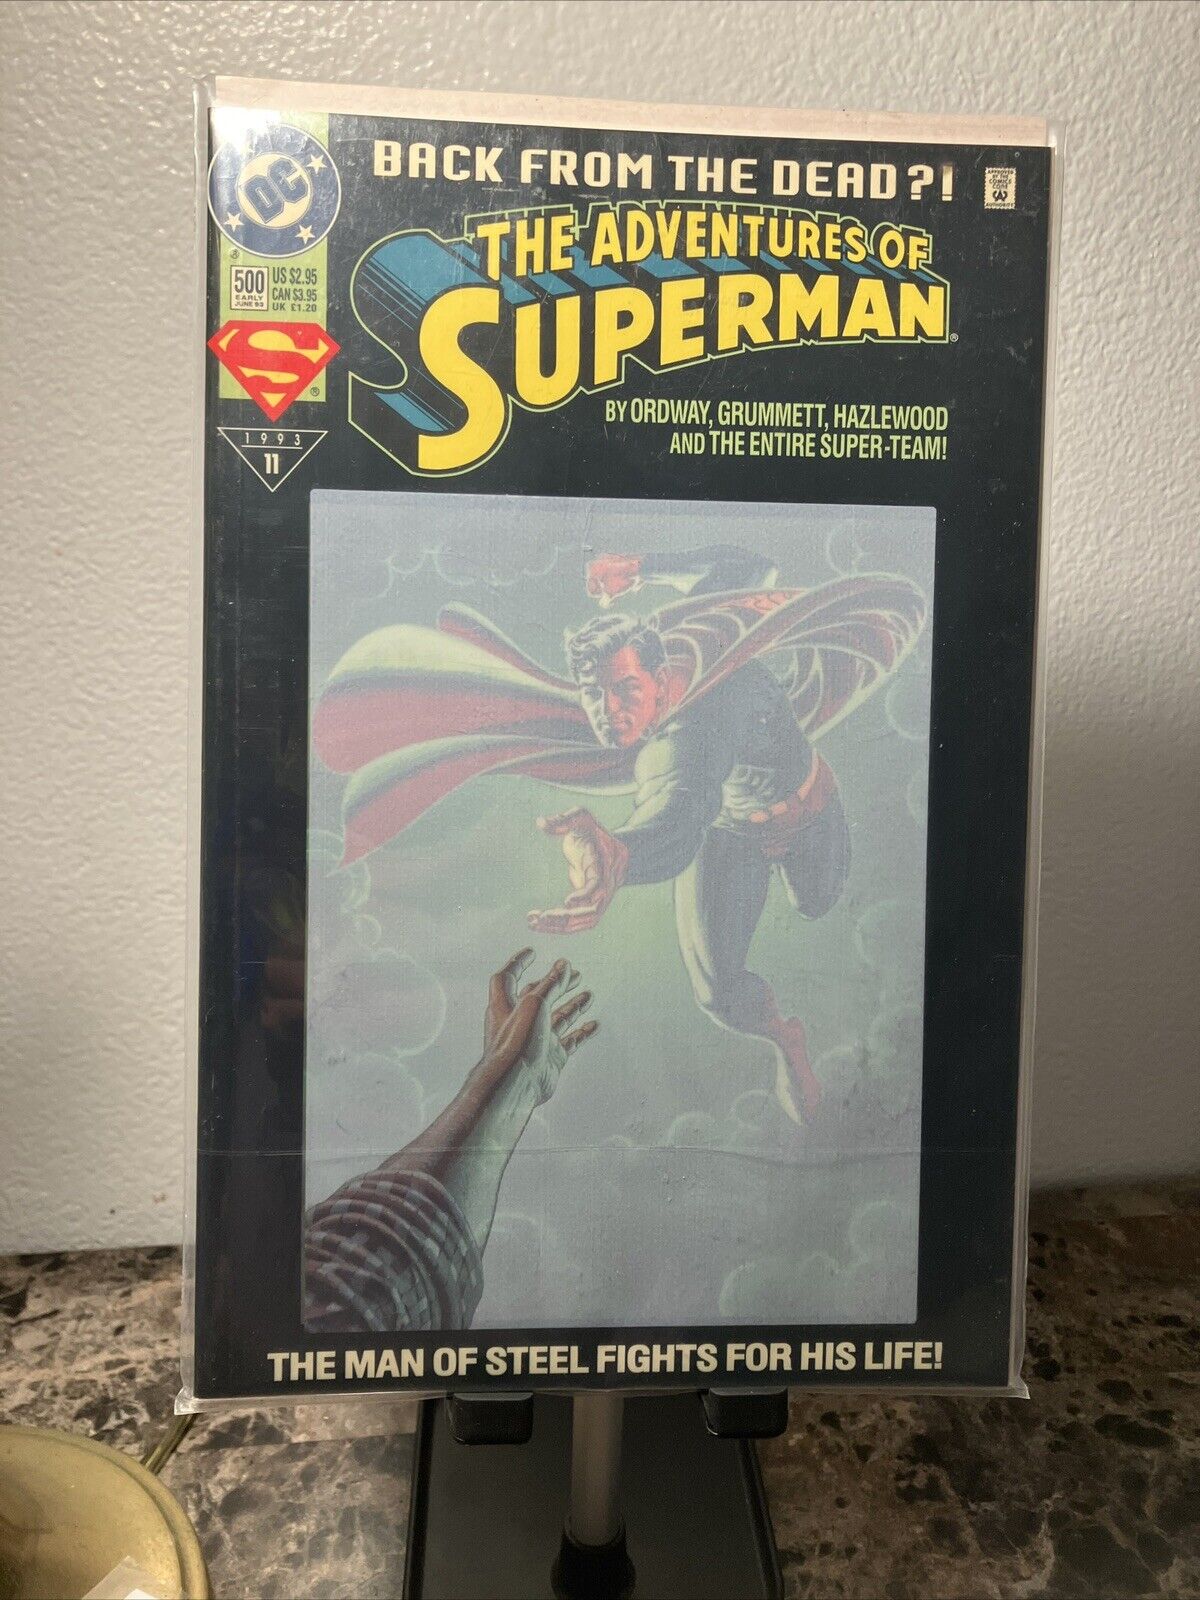 Adventures of Superman #500 (DC Comics, Early June 1993)